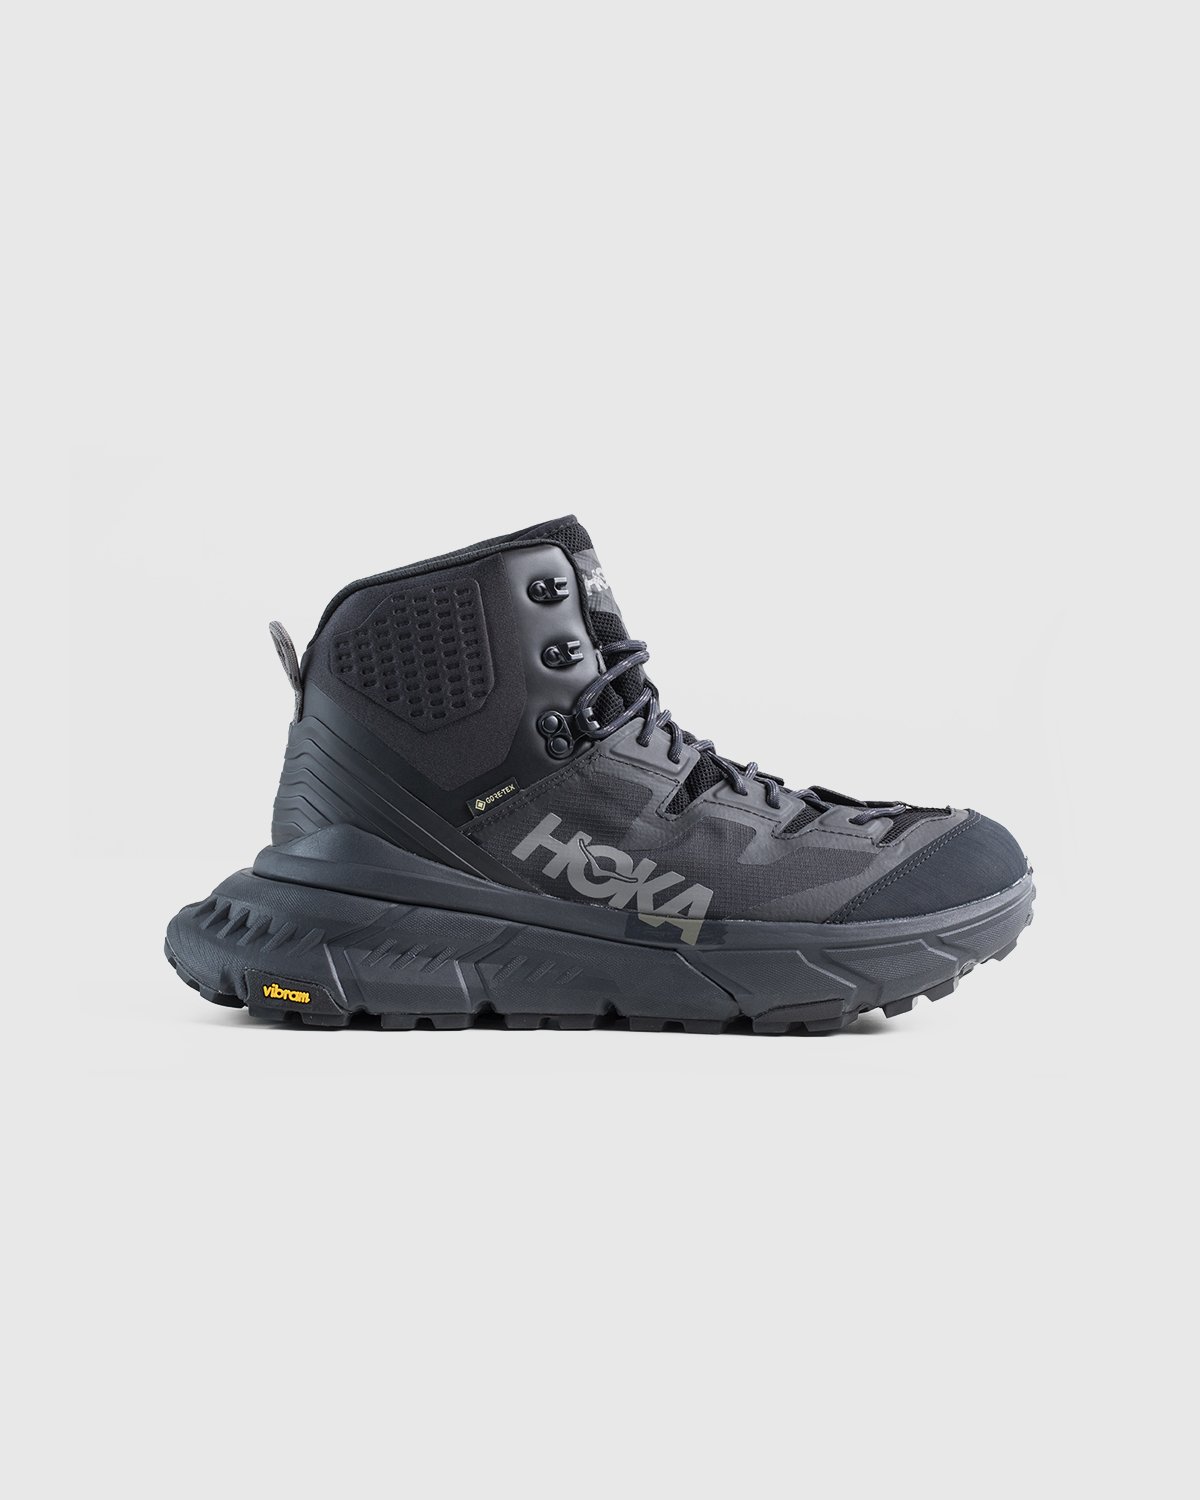 HOKA - M Tennine Hike GTX Black Dark Gull Grey - Footwear - Black - Image 1